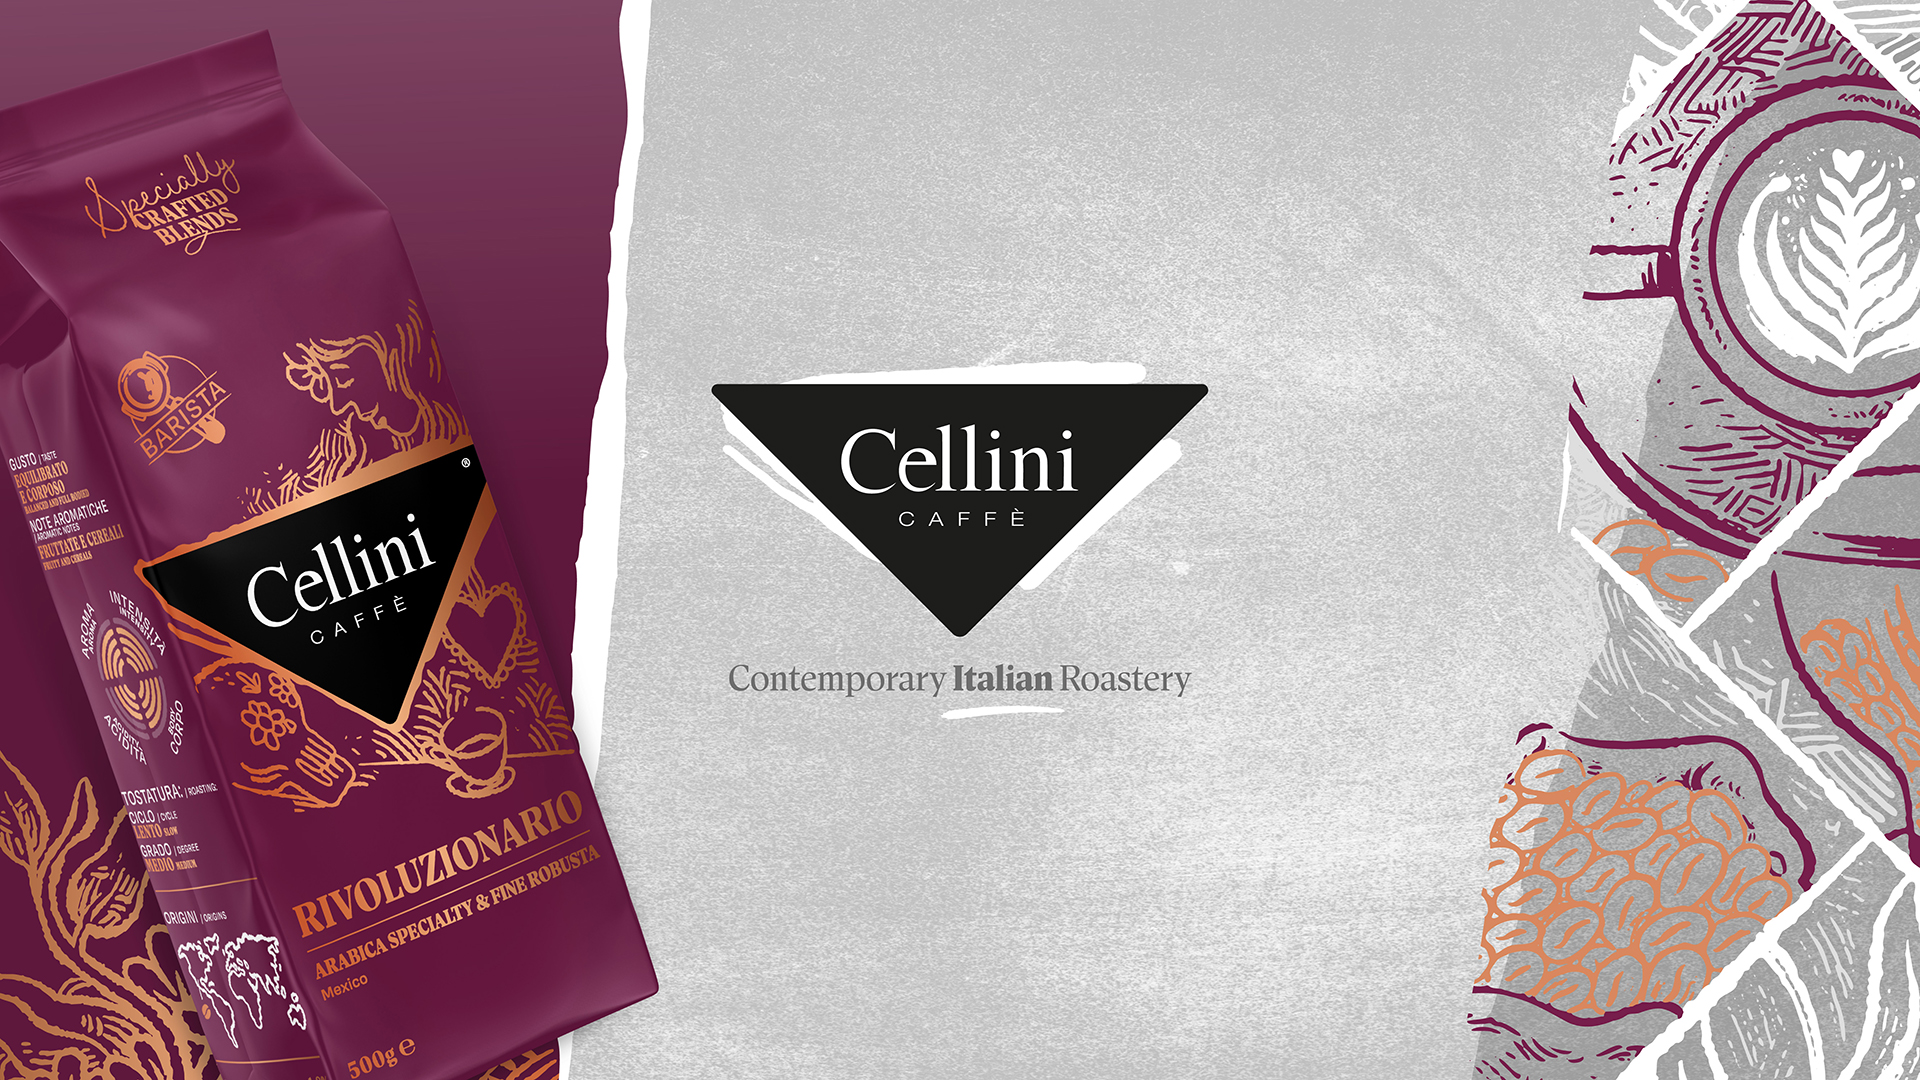 Cellini: a successful rebranding story.